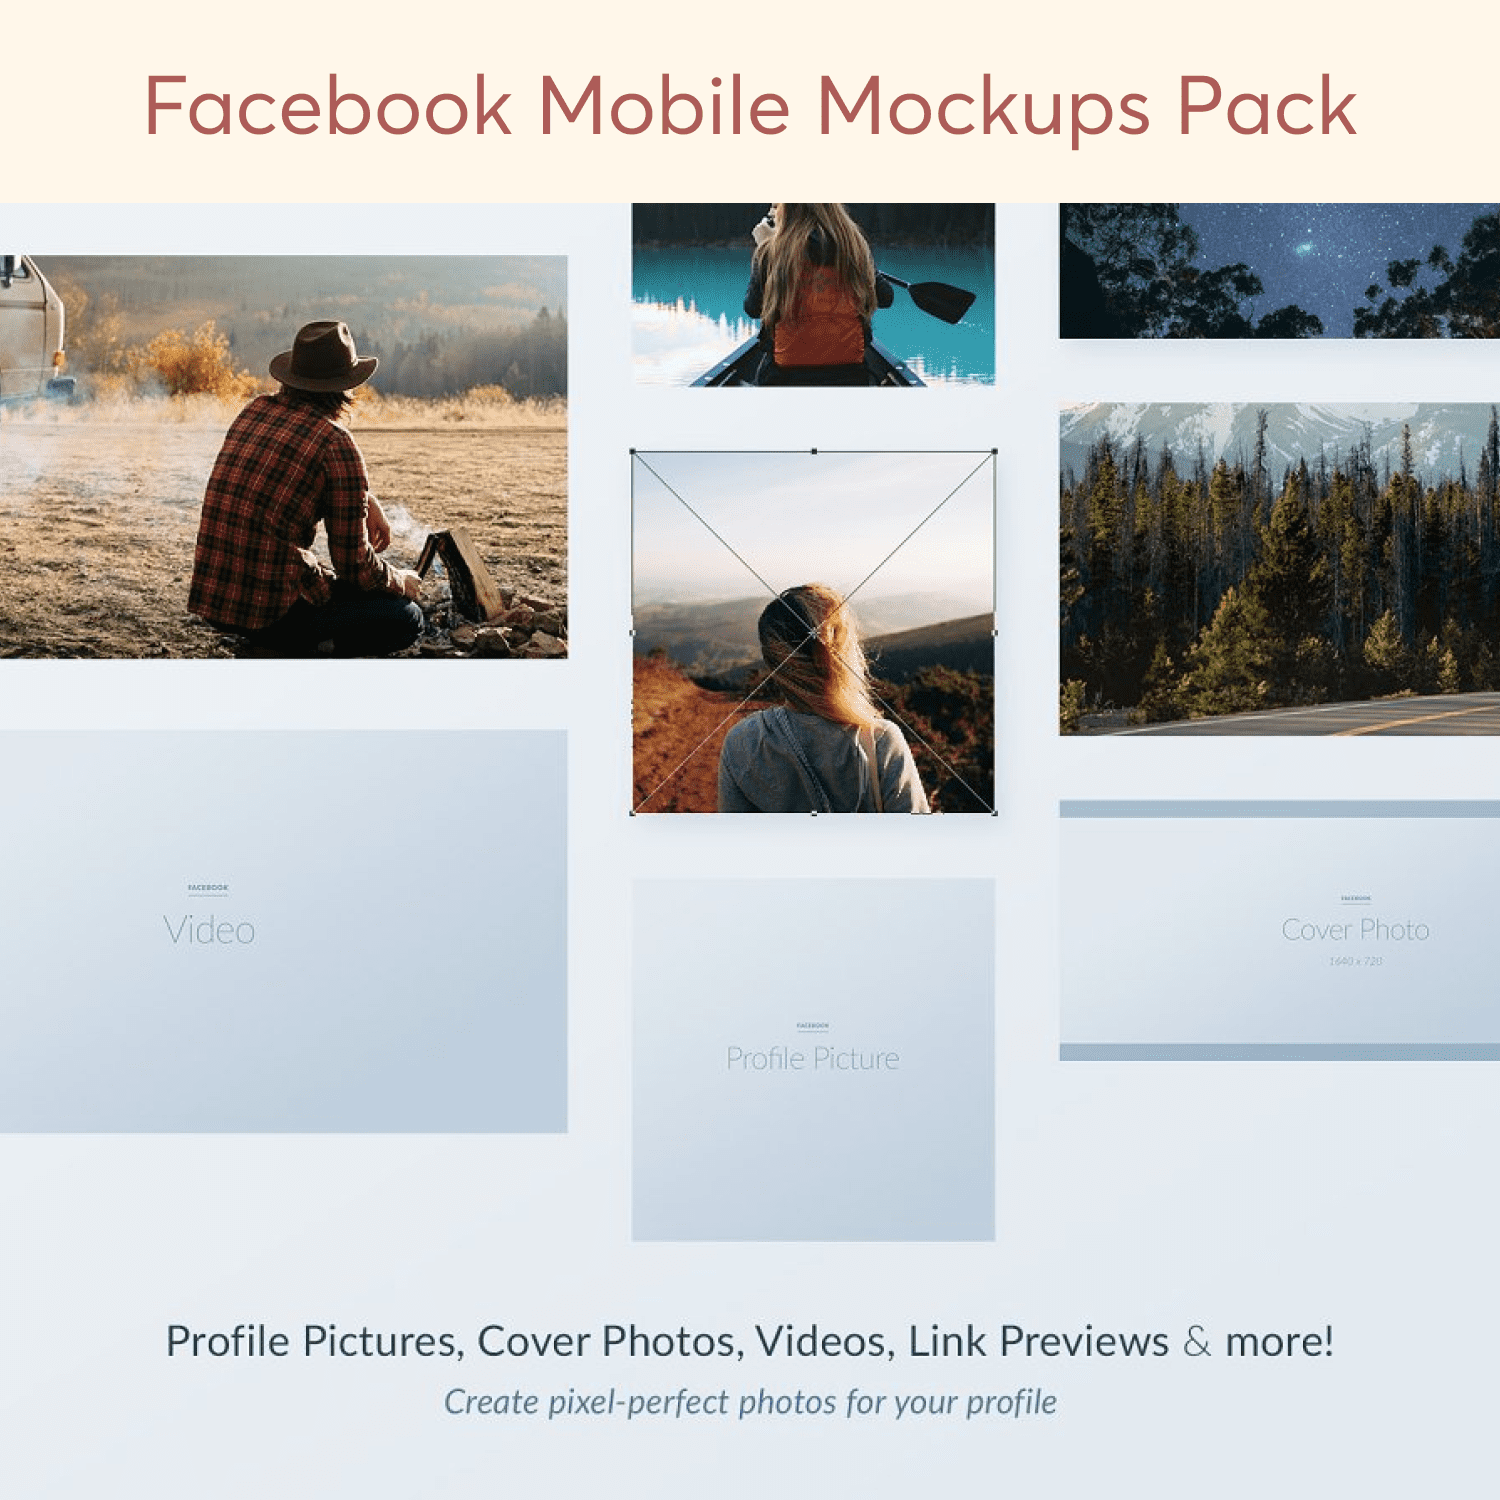 Facebook Mobile Mockups Pack cover image.